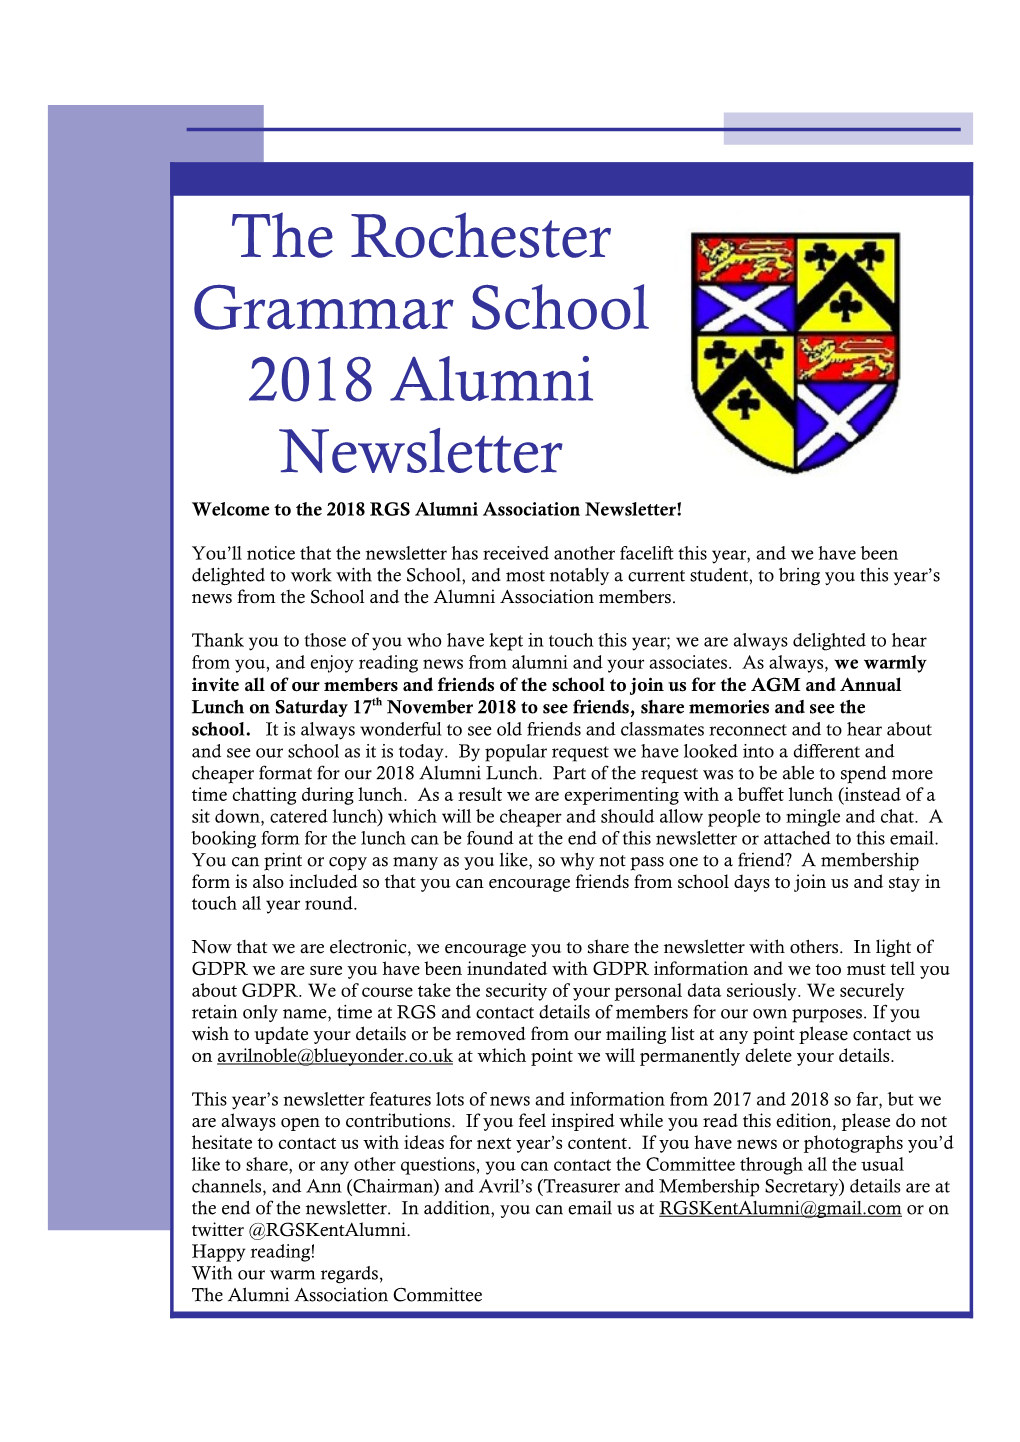 The Rochester Grammar School 2018 Alumni Newsletter Welcome to the 2018 RGS Alumni Association Newsletter!